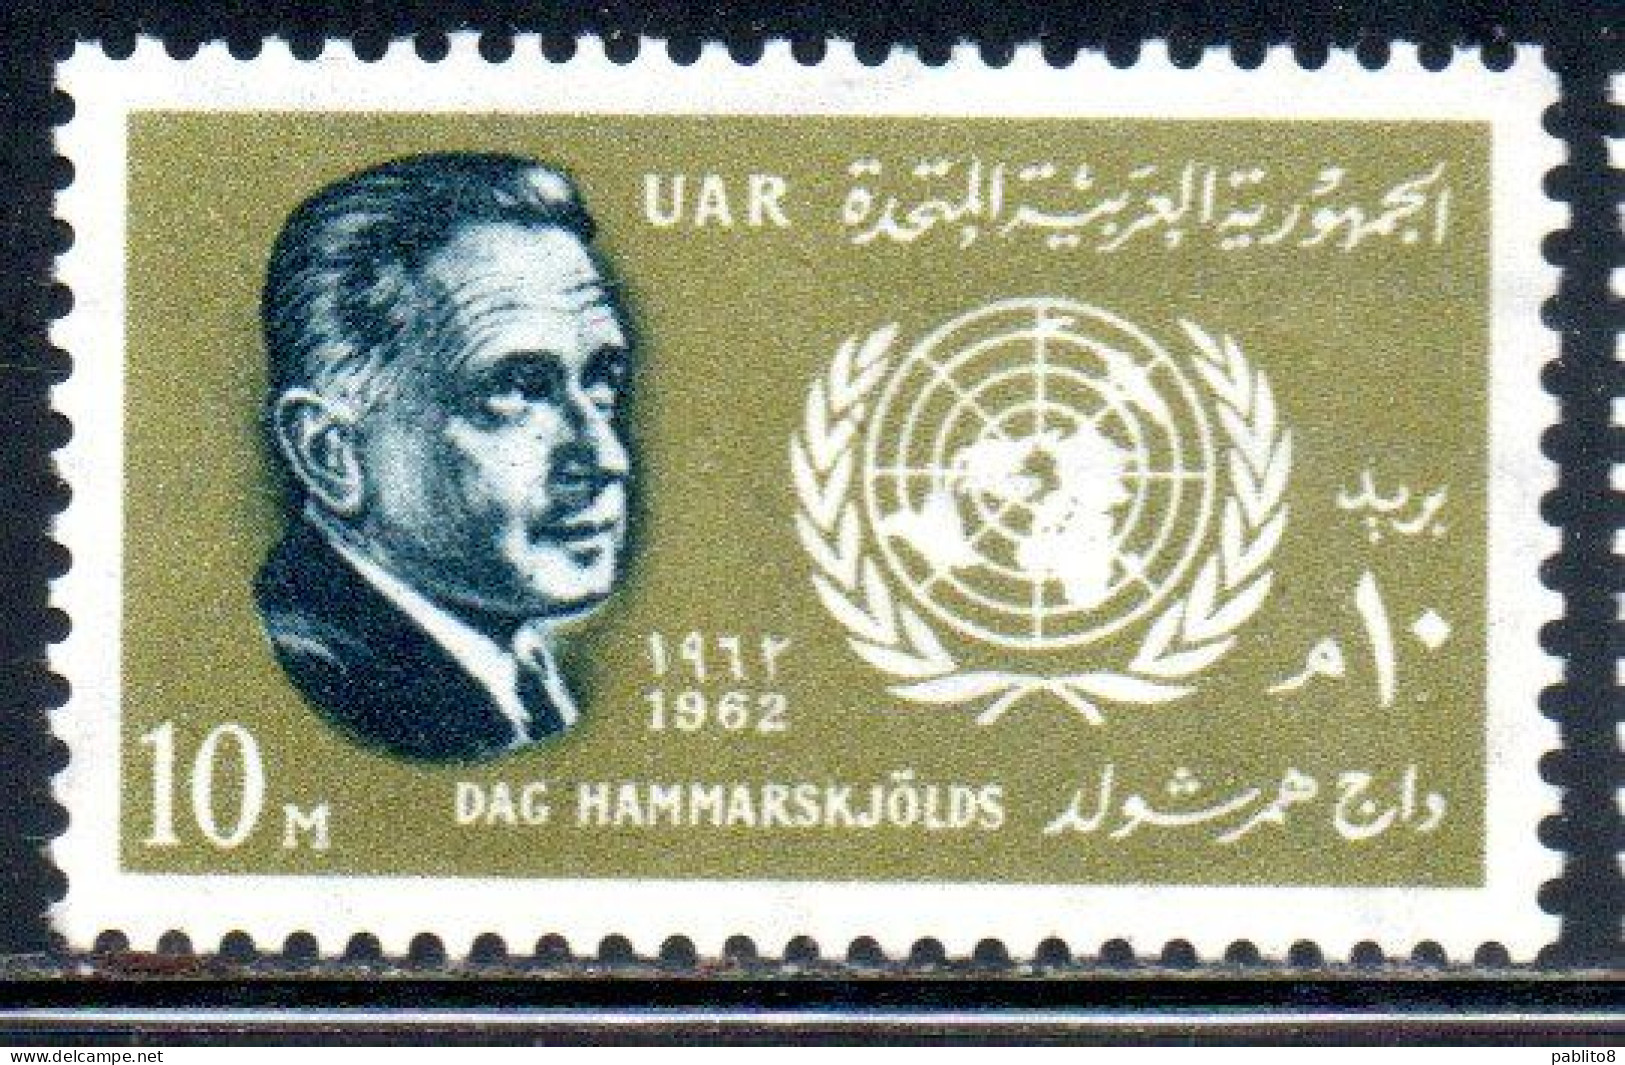 UAR EGYPT EGITTO 1962 DAG HAMMARSKJOLD SECRETARY GENERAL OF THE UN ONU 10m MNH - Unused Stamps